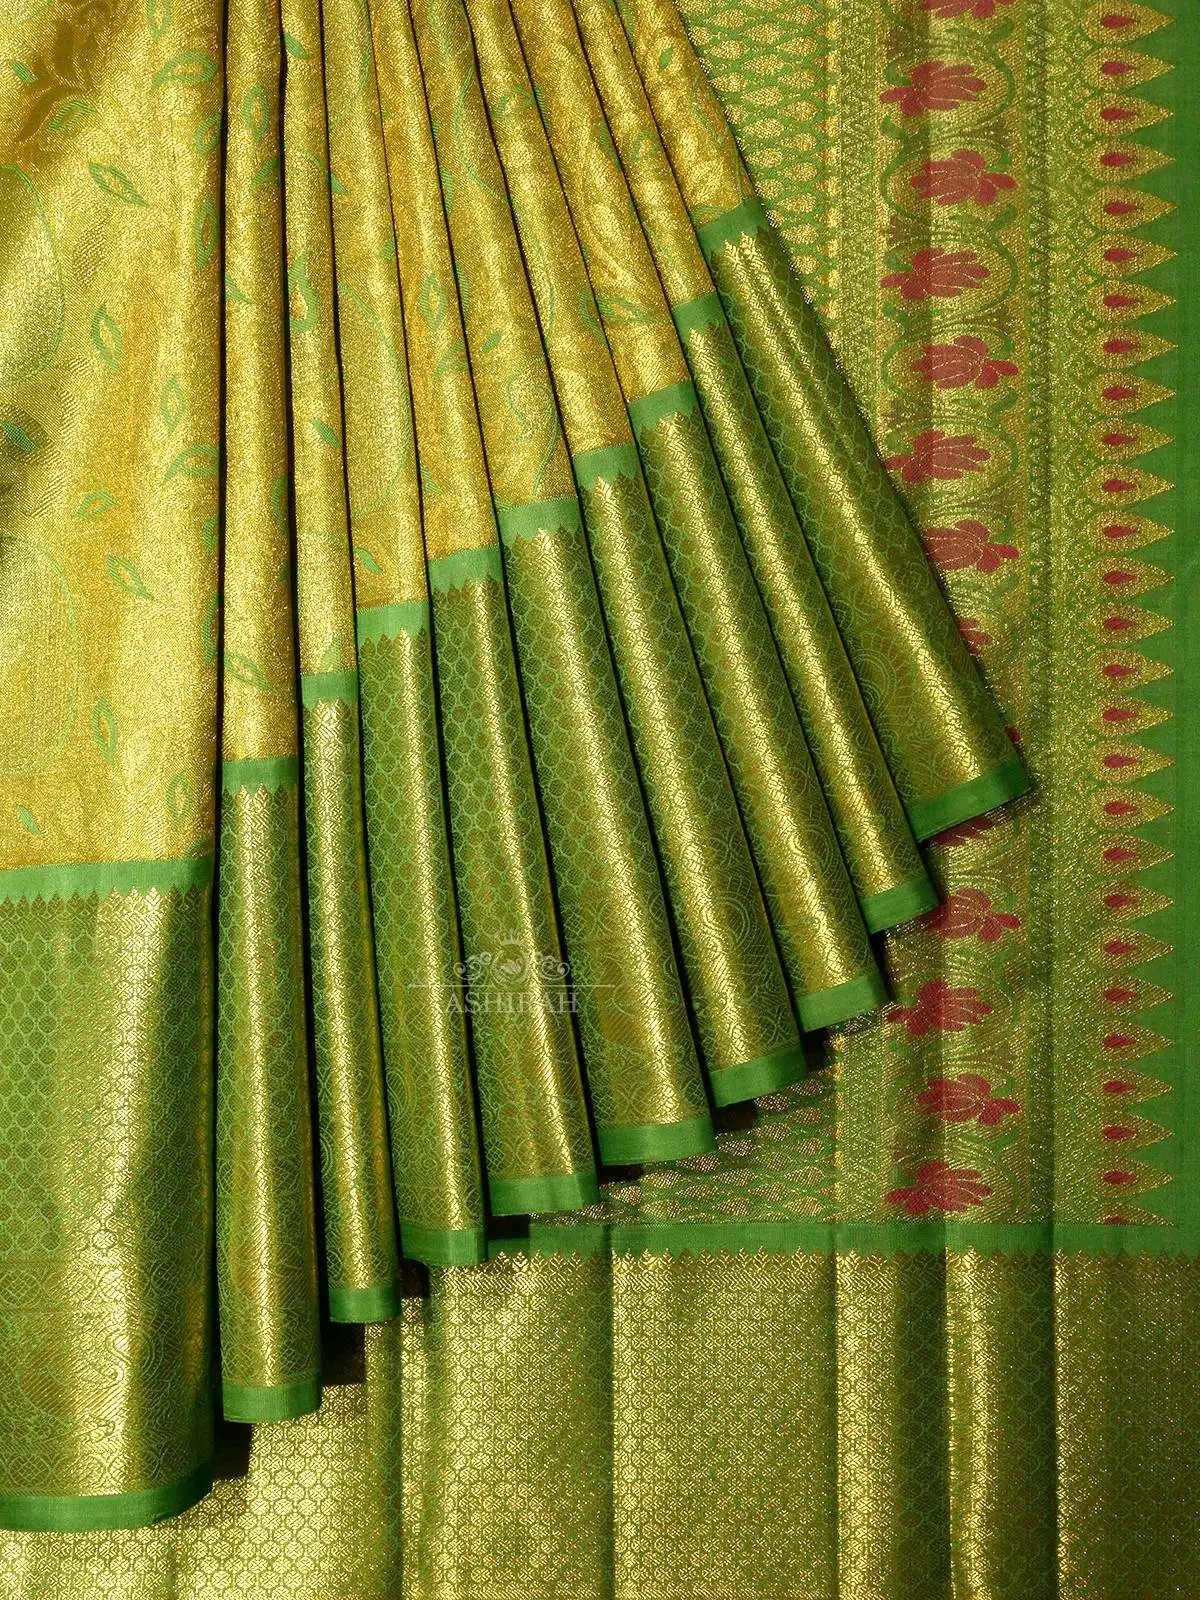 Green Pure Kanchipuram (Bridal) Silk Saree with Brocade all over the body and Design Motifs Zari Border